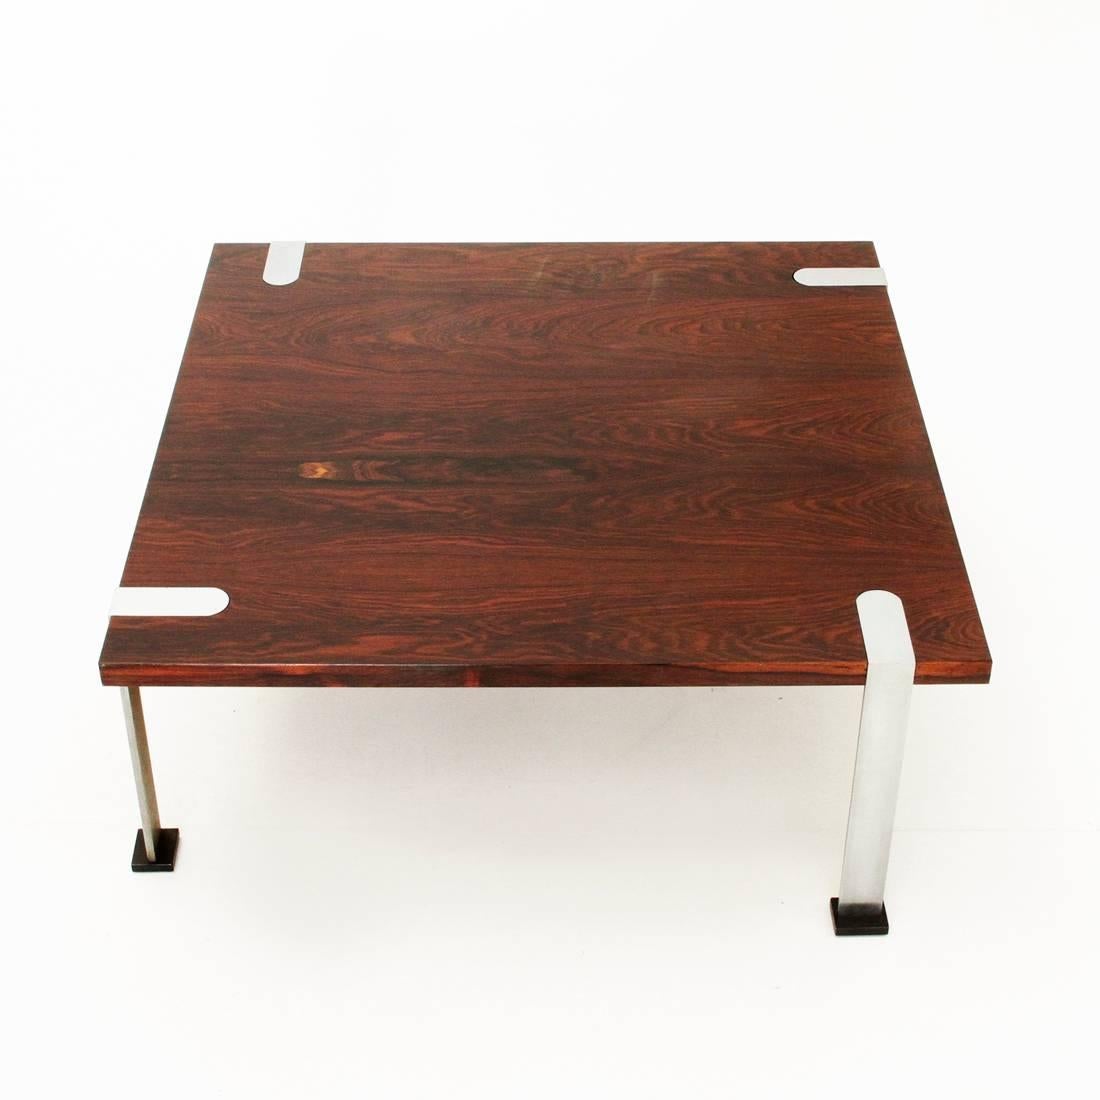 Superb 1960s Italian manufacture table
Veneered wooden square top with cast aluminium legs.
Good general conditions.

Dimensions: Width 75 cm x depth 75 cm x height 31 cm.